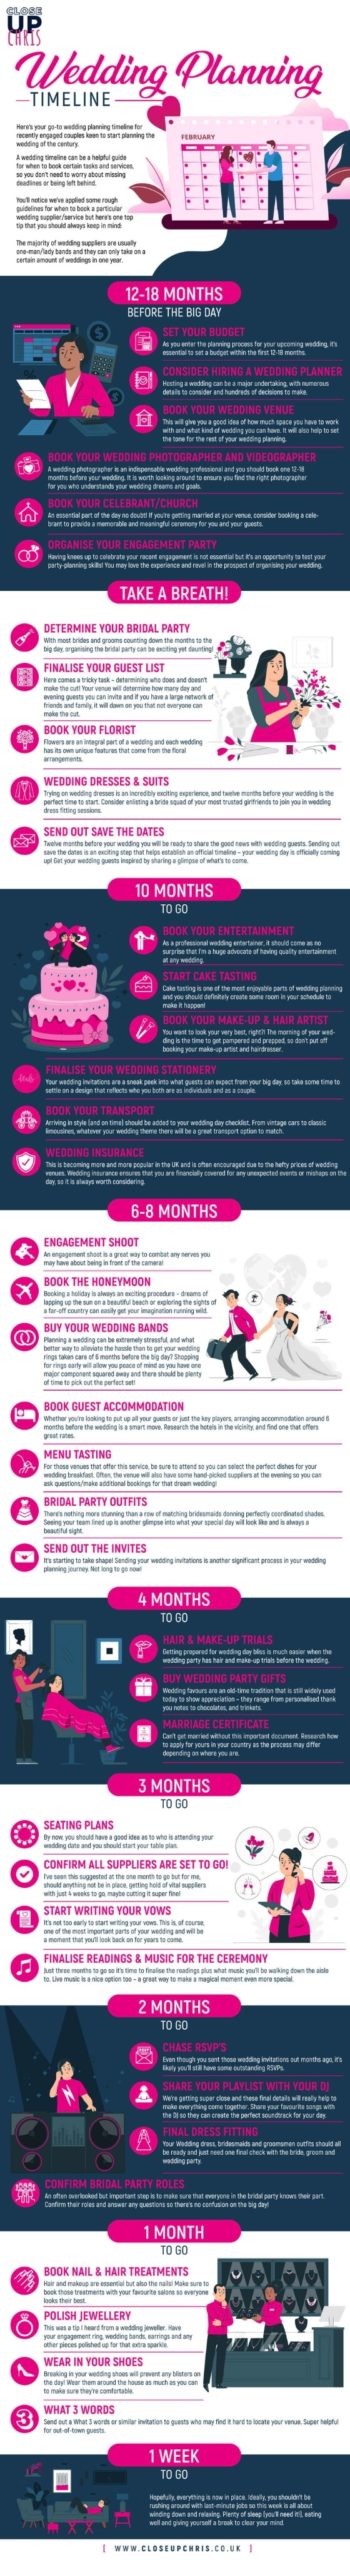 wedding planning timeline infographic